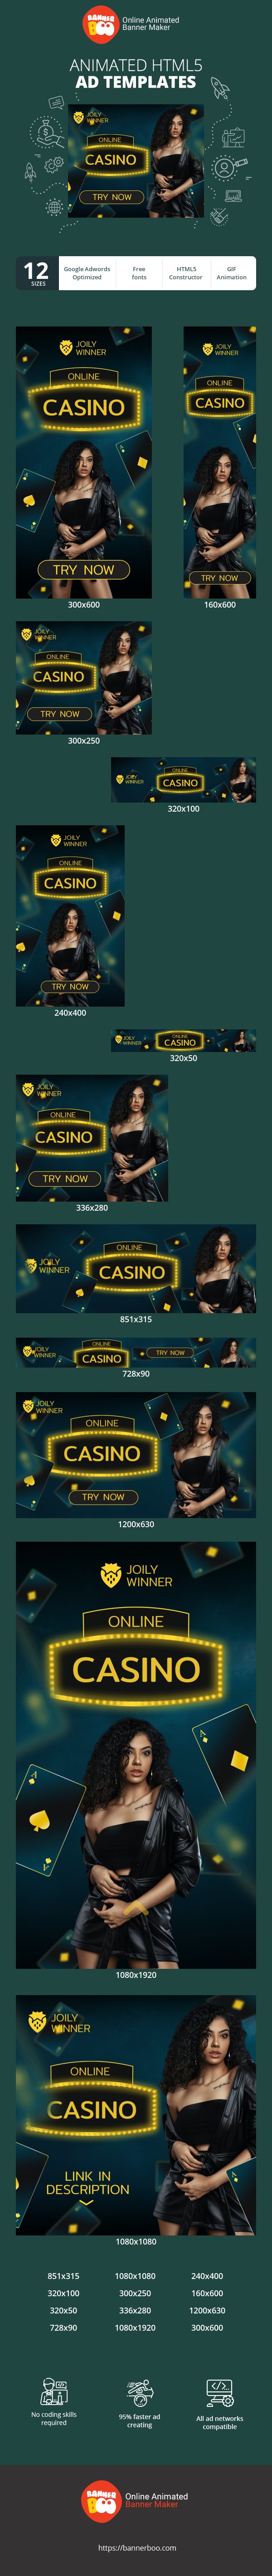 Szablon reklamy banerowej — Online Casino — Gambling